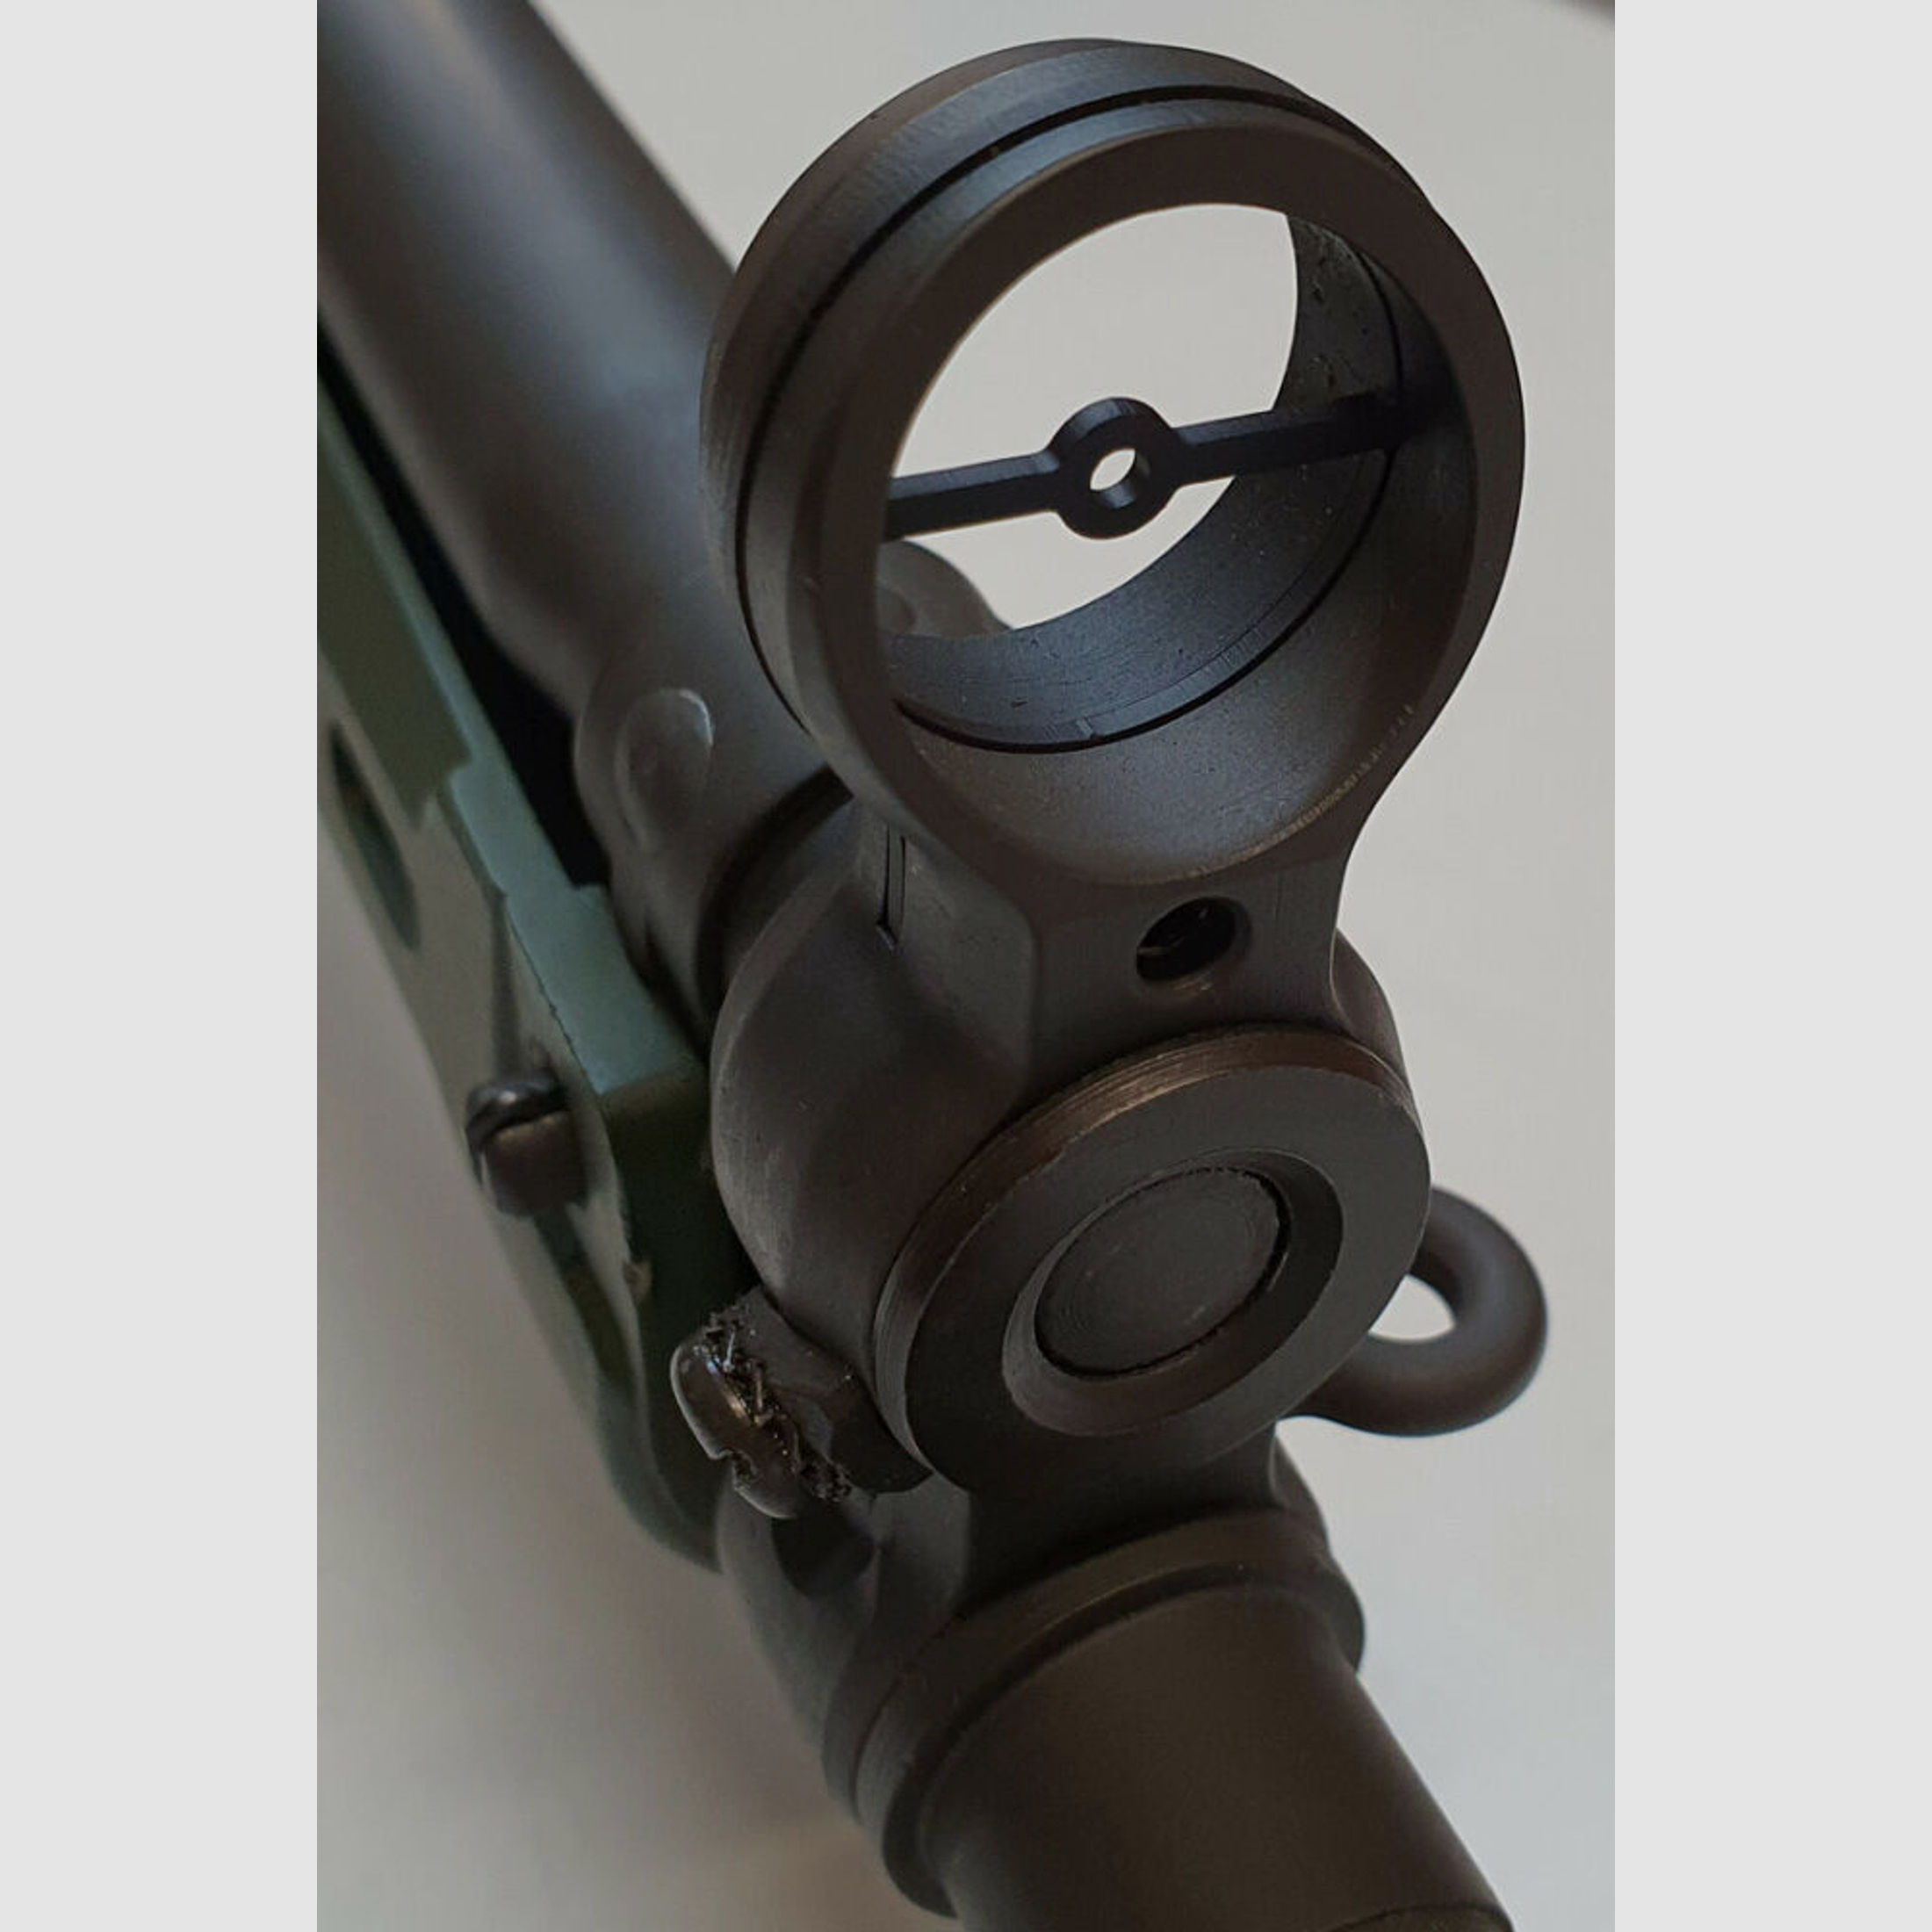 Schwaben Arms GmbH	 SAR M41, HK G3 Match Ringkorn Ø 2,0mm Visier für Kornträger, auch HK SL6, SL7, G3, MP5, HK33, etc.